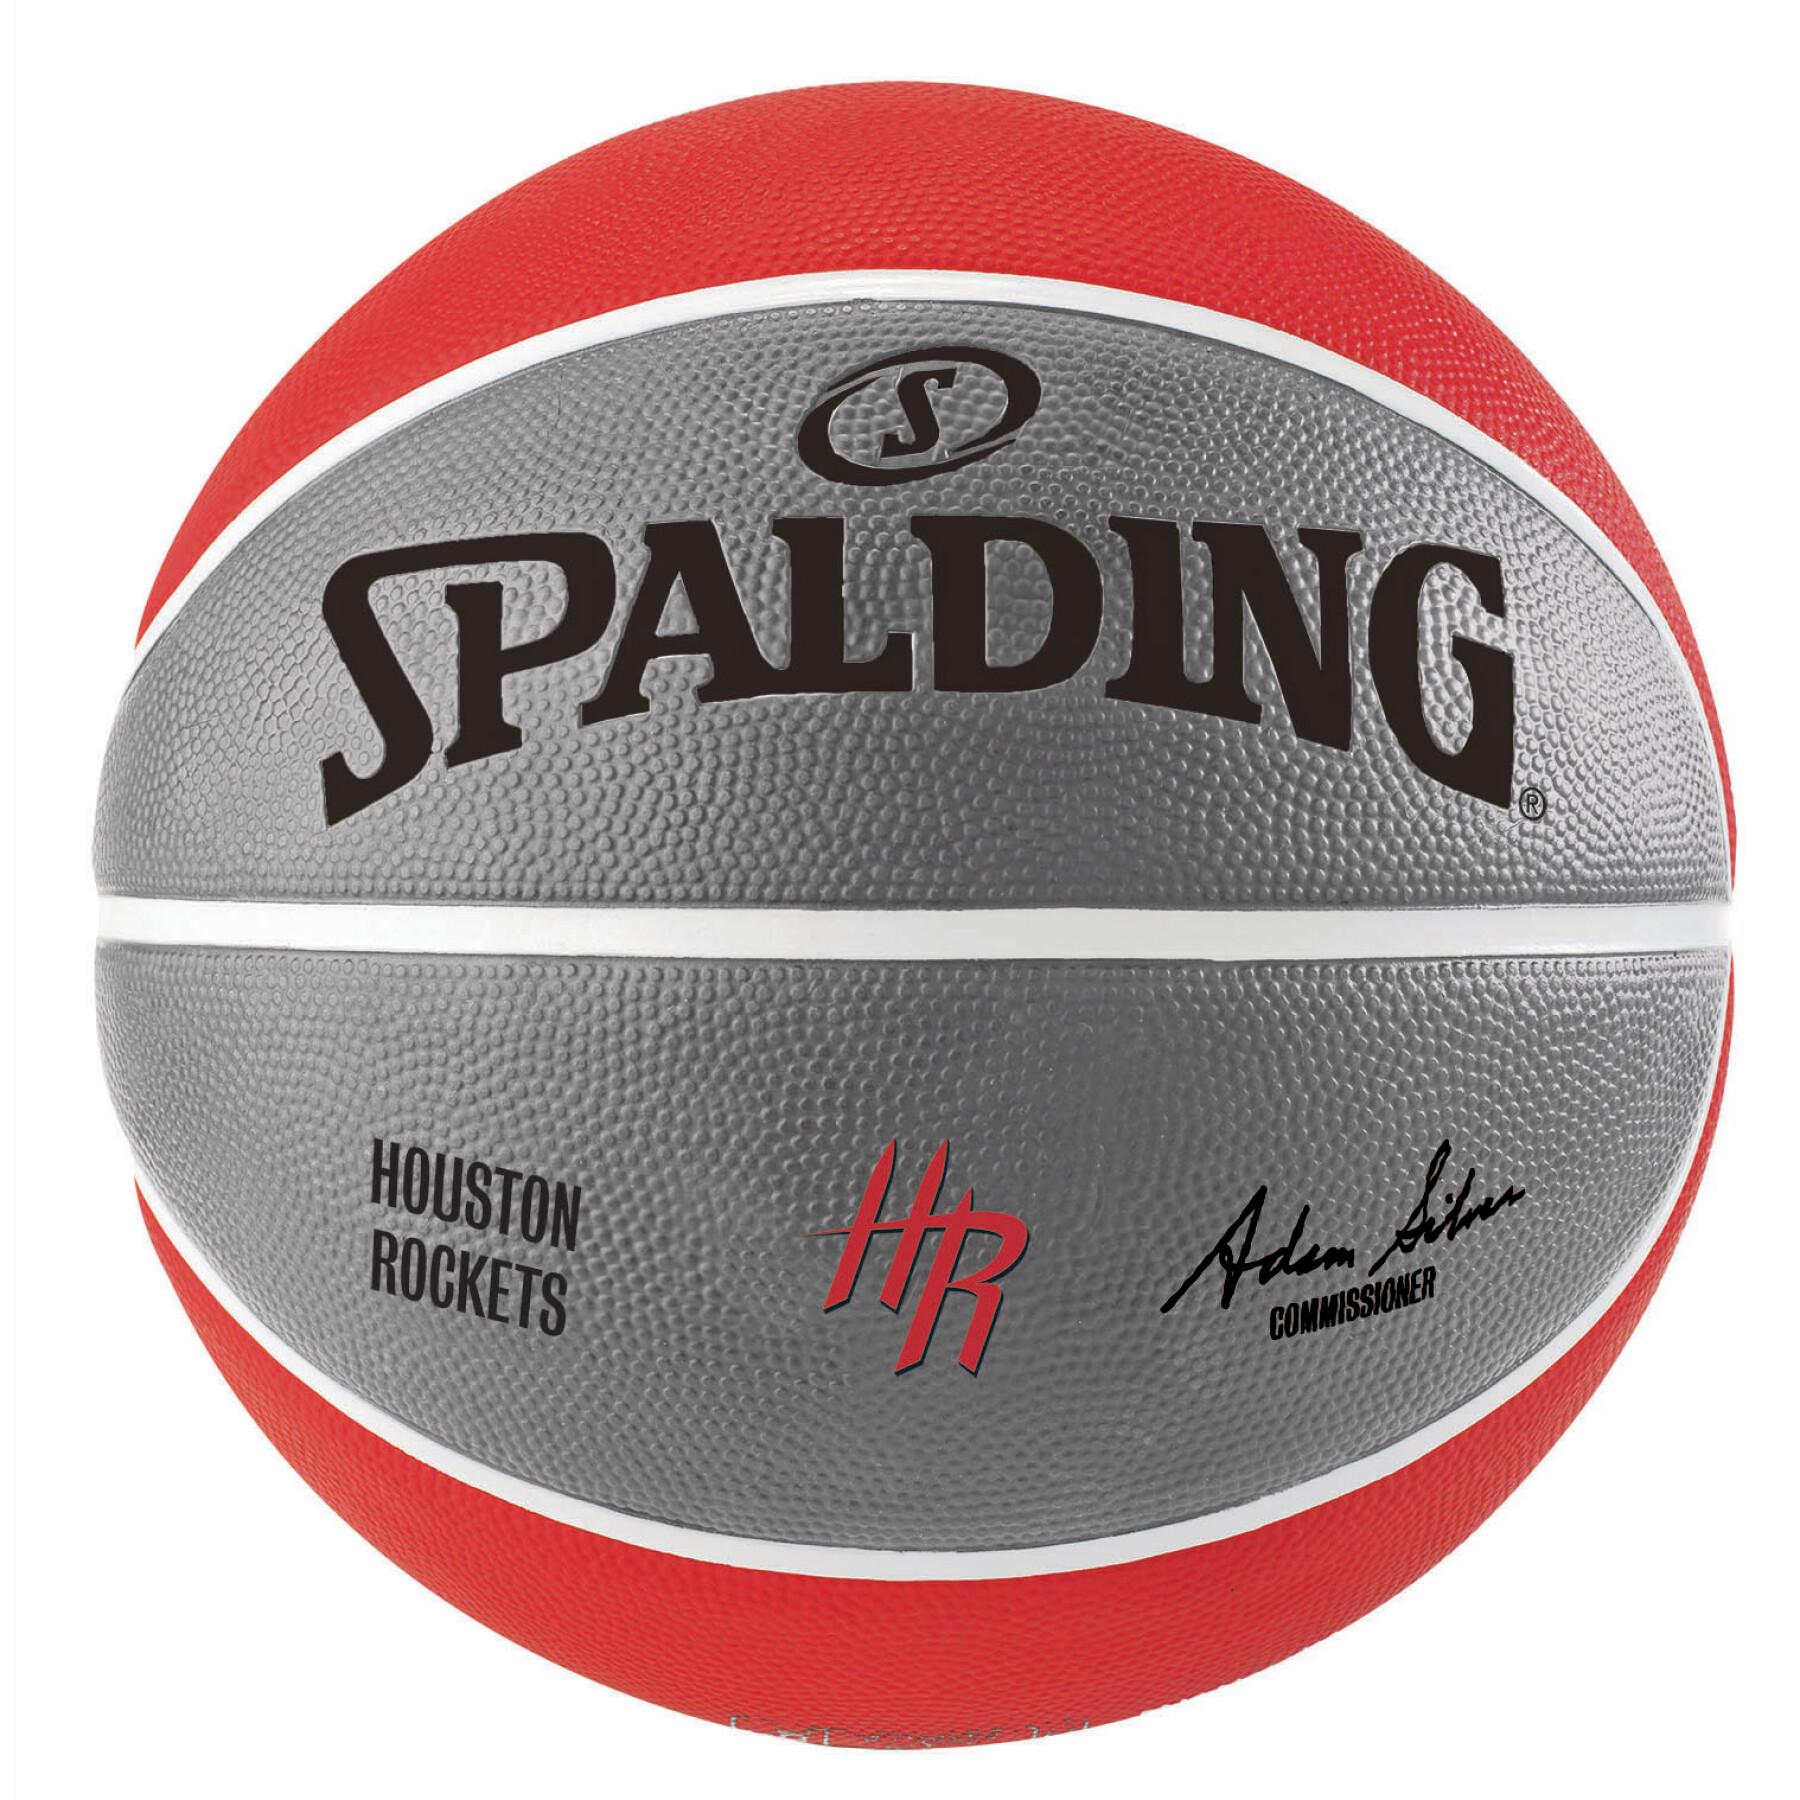 Balão Spalding NBA team ball Houston Rockets